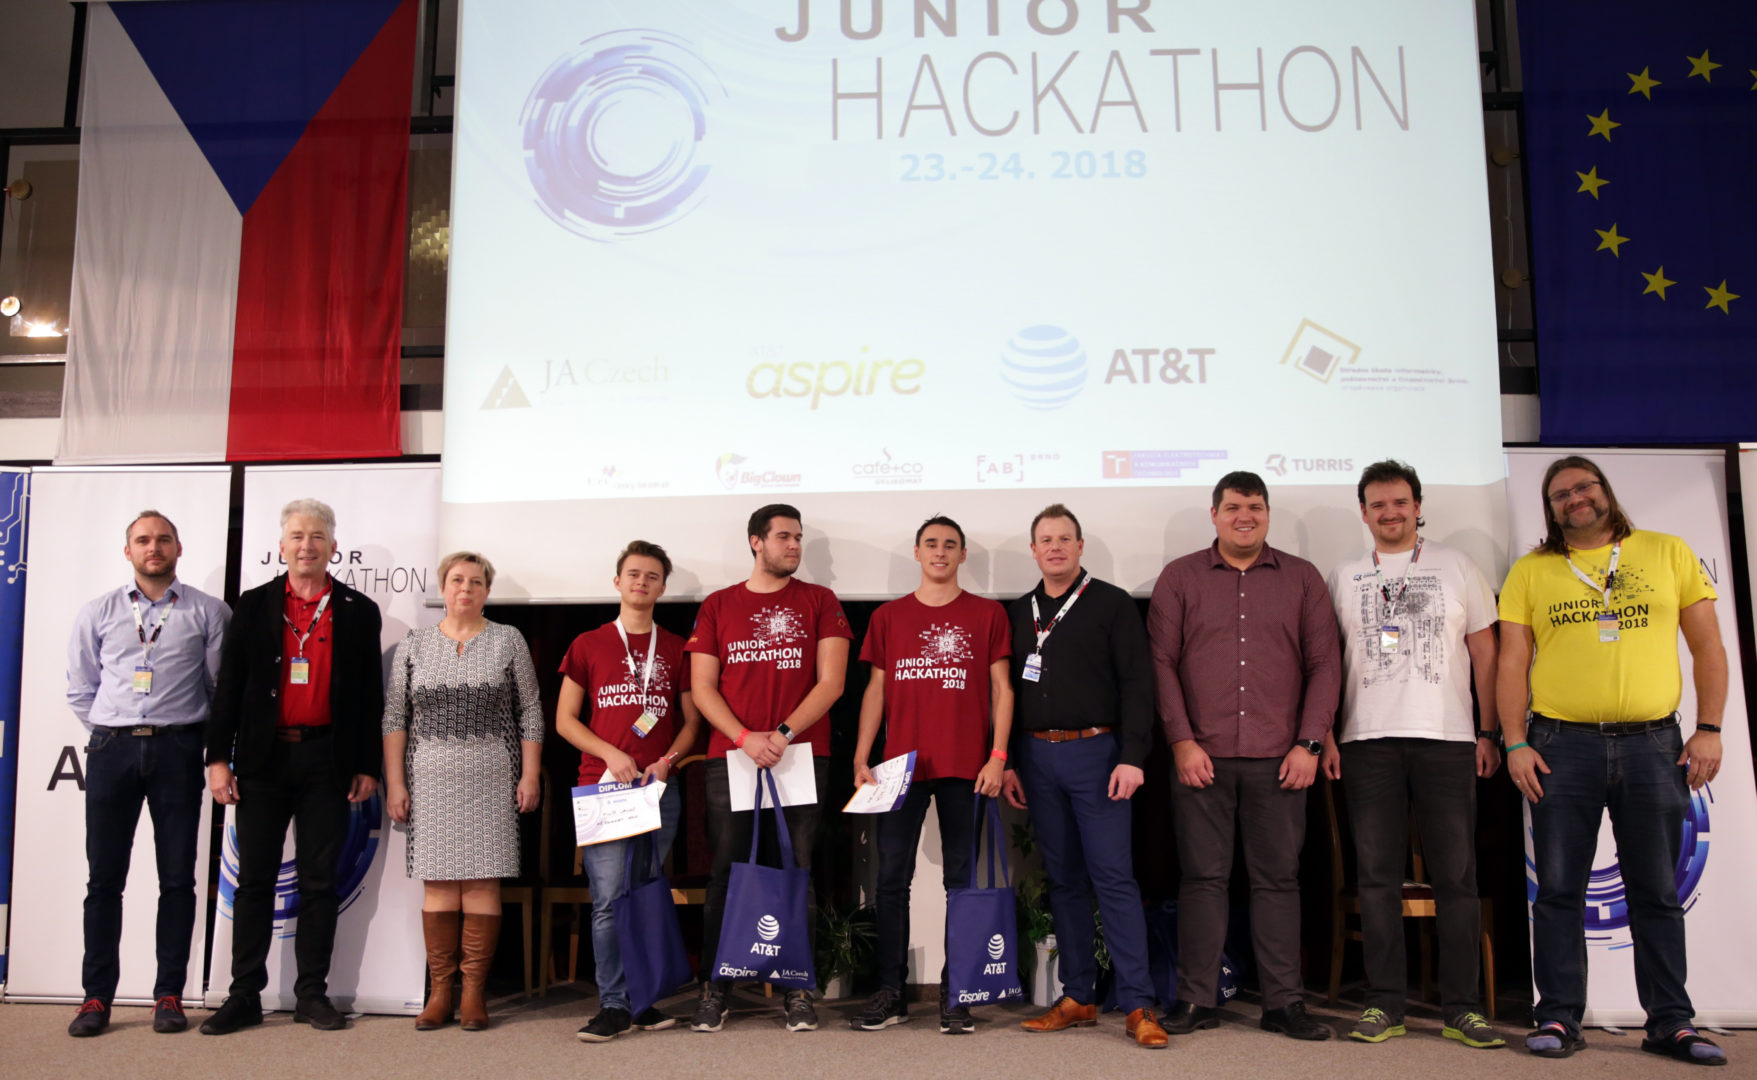 Junior Hackathon Brno 2018, Secondary School of Informatics, Postal Services and Finance, Brno